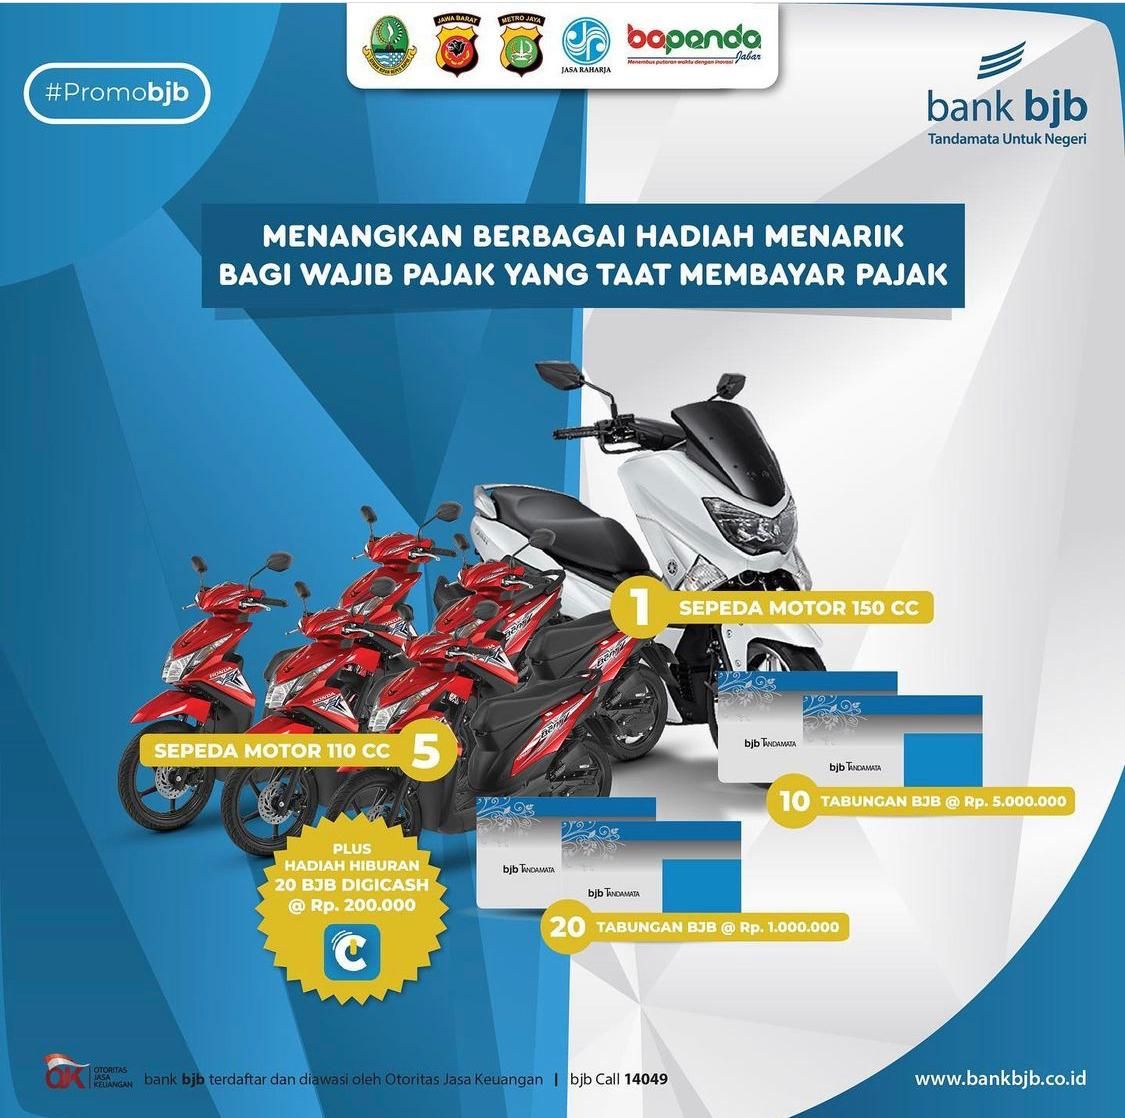 Guna mendorong akselerasi penerimaan PAD Jawa Barat, bank bjb mendukung program Triple Untung yang diselenggarakan Badan Pendapatan Daerah (Bapenda) Jawa Barat. 